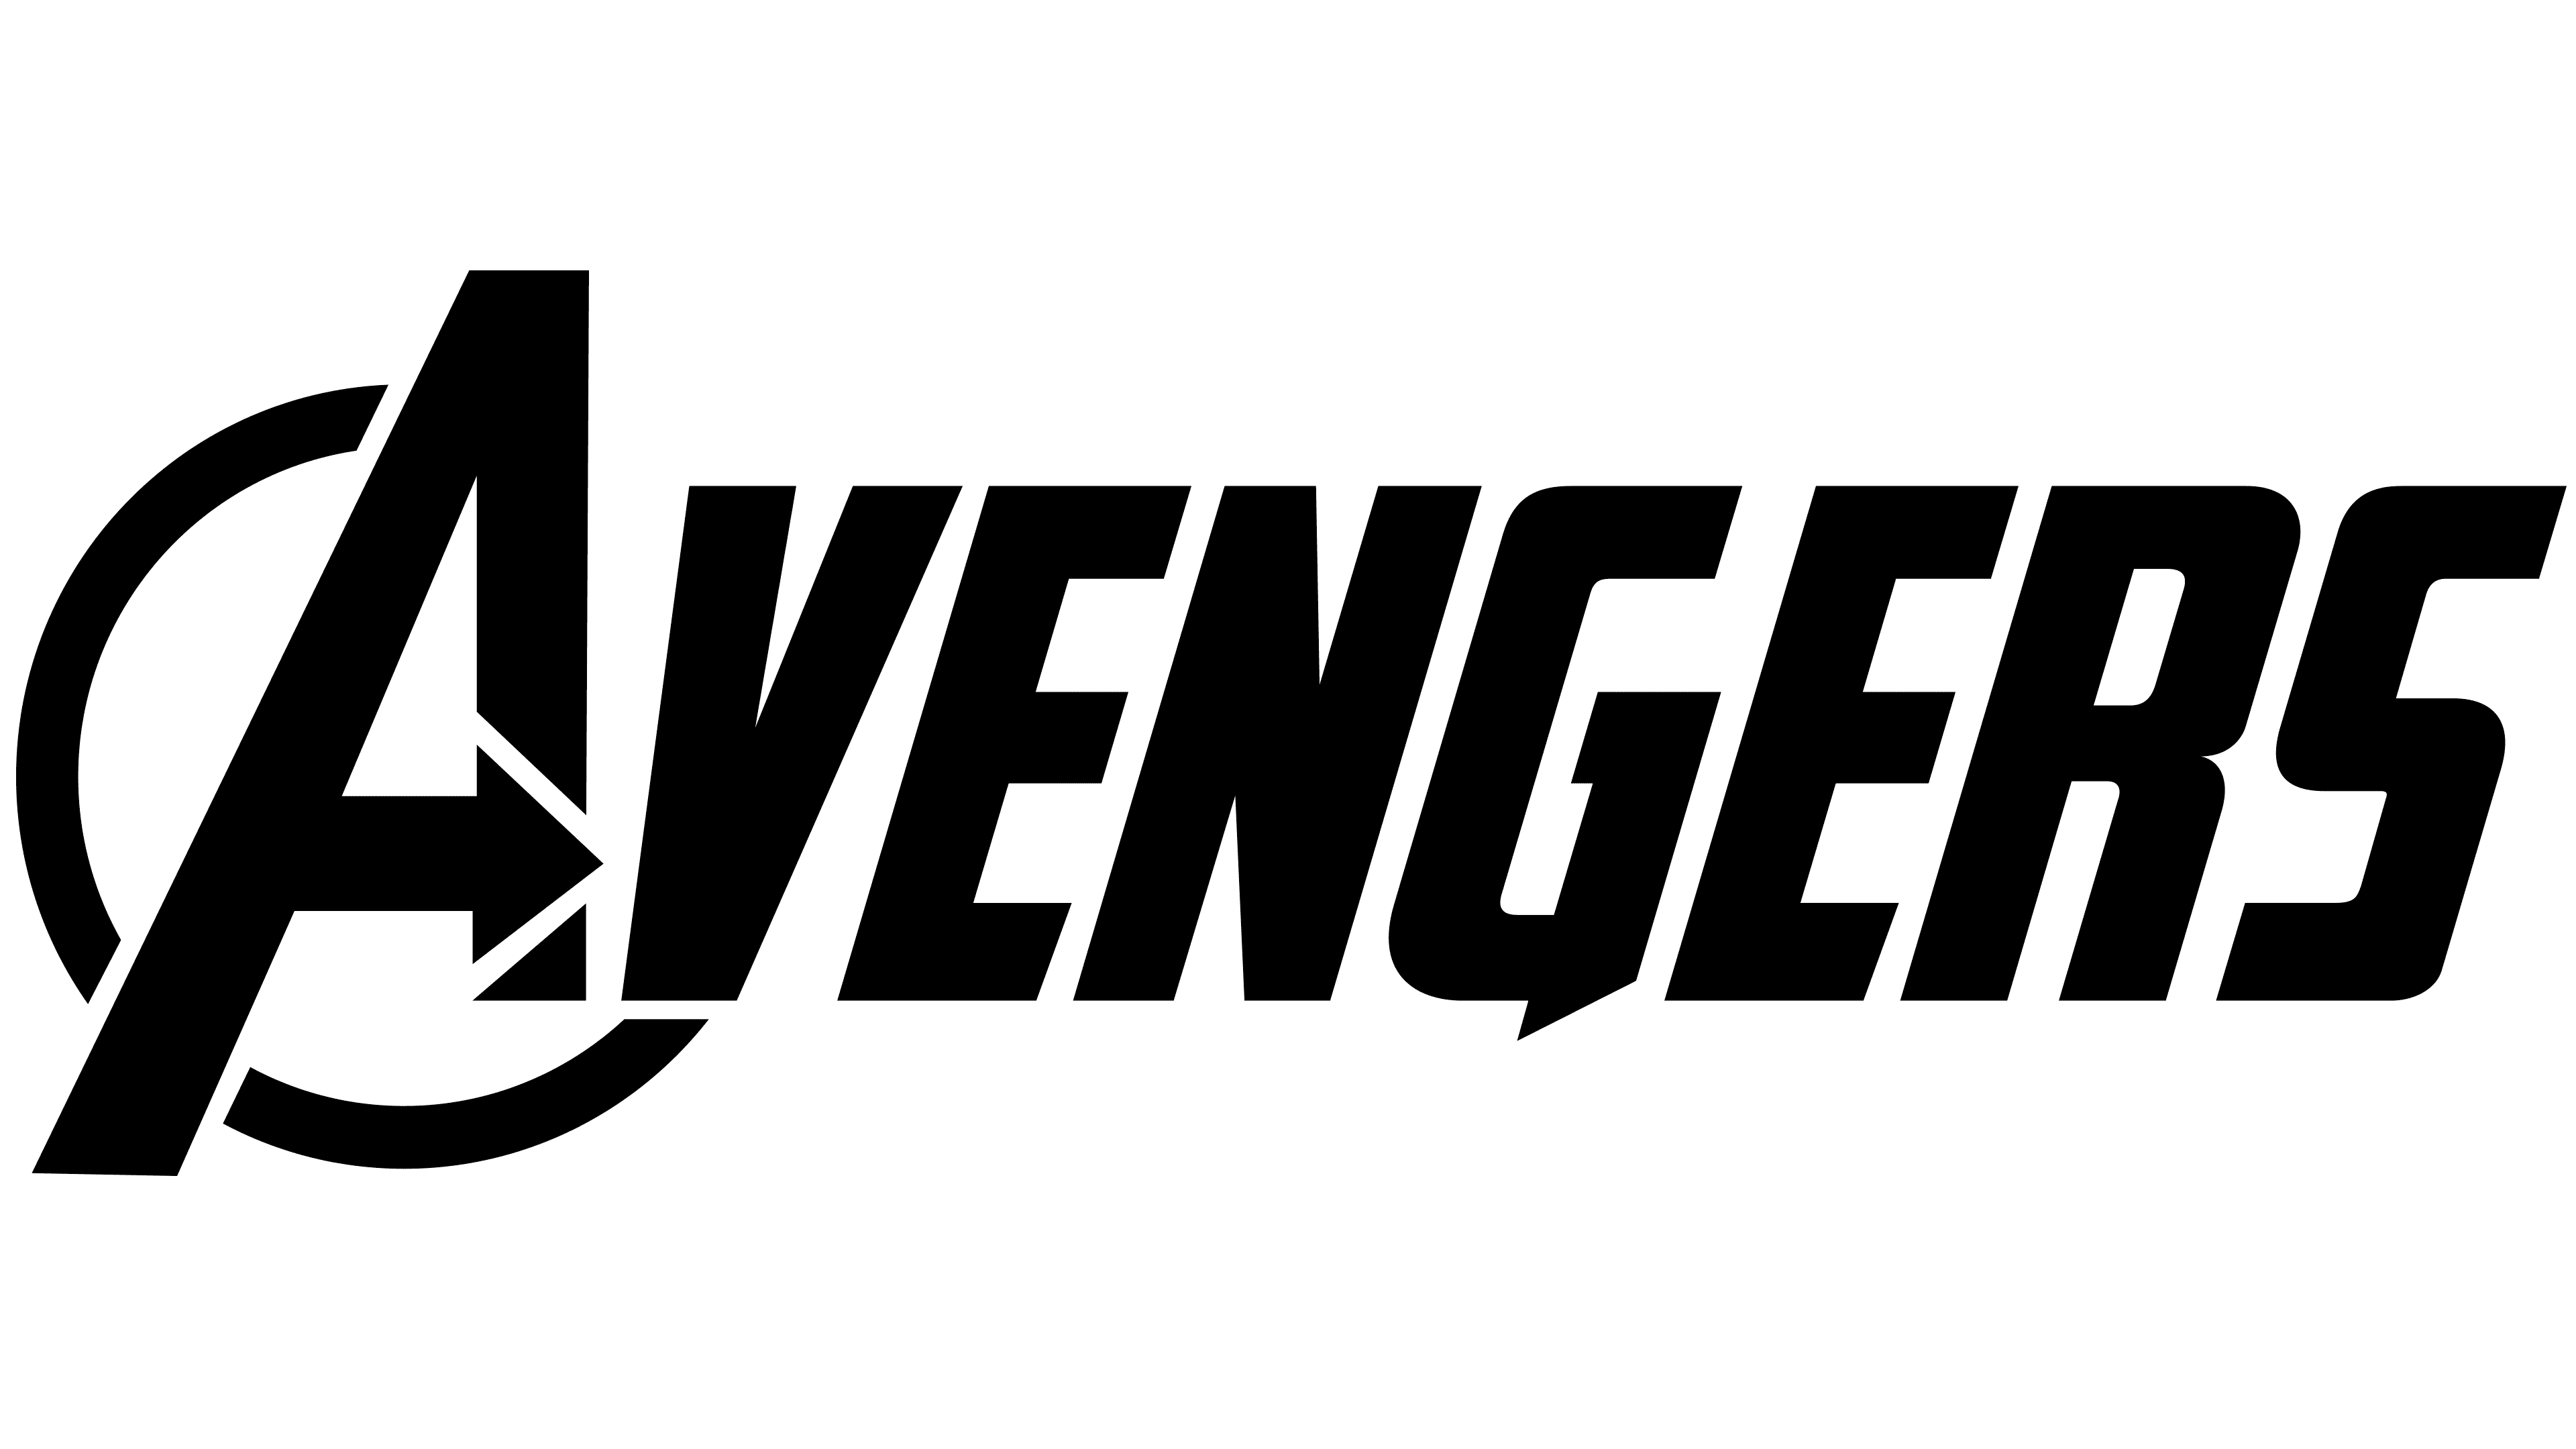 Download Logo Avengers Download Free Image HQ PNG Image | FreePNGImg